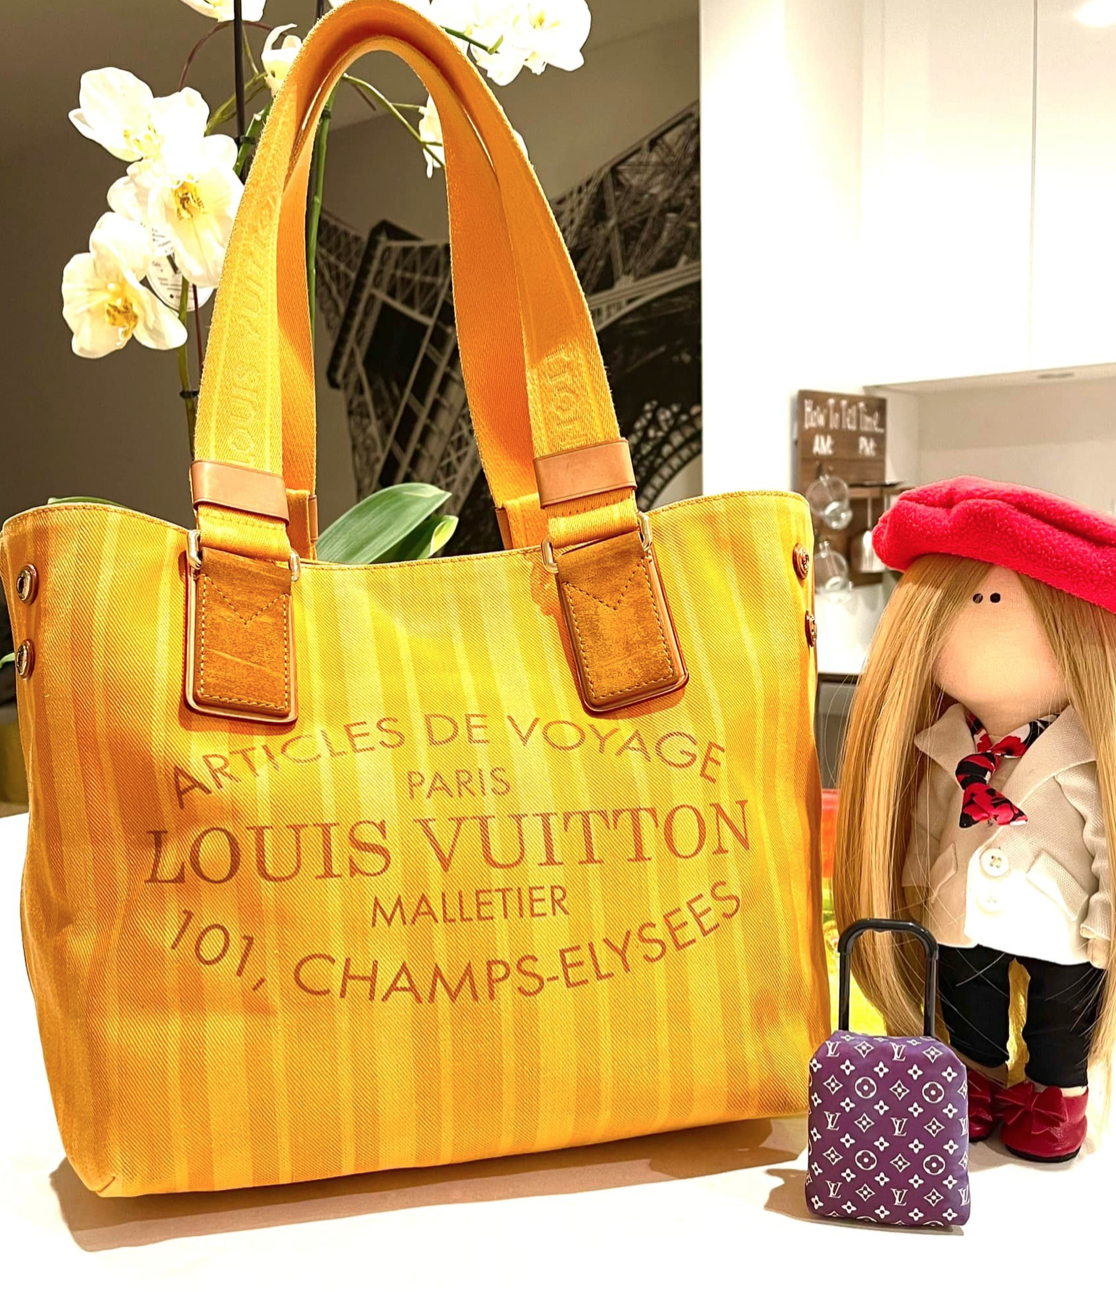 Louis Vuitton Articles De Voyage Paris Malletier 101 -  Canada